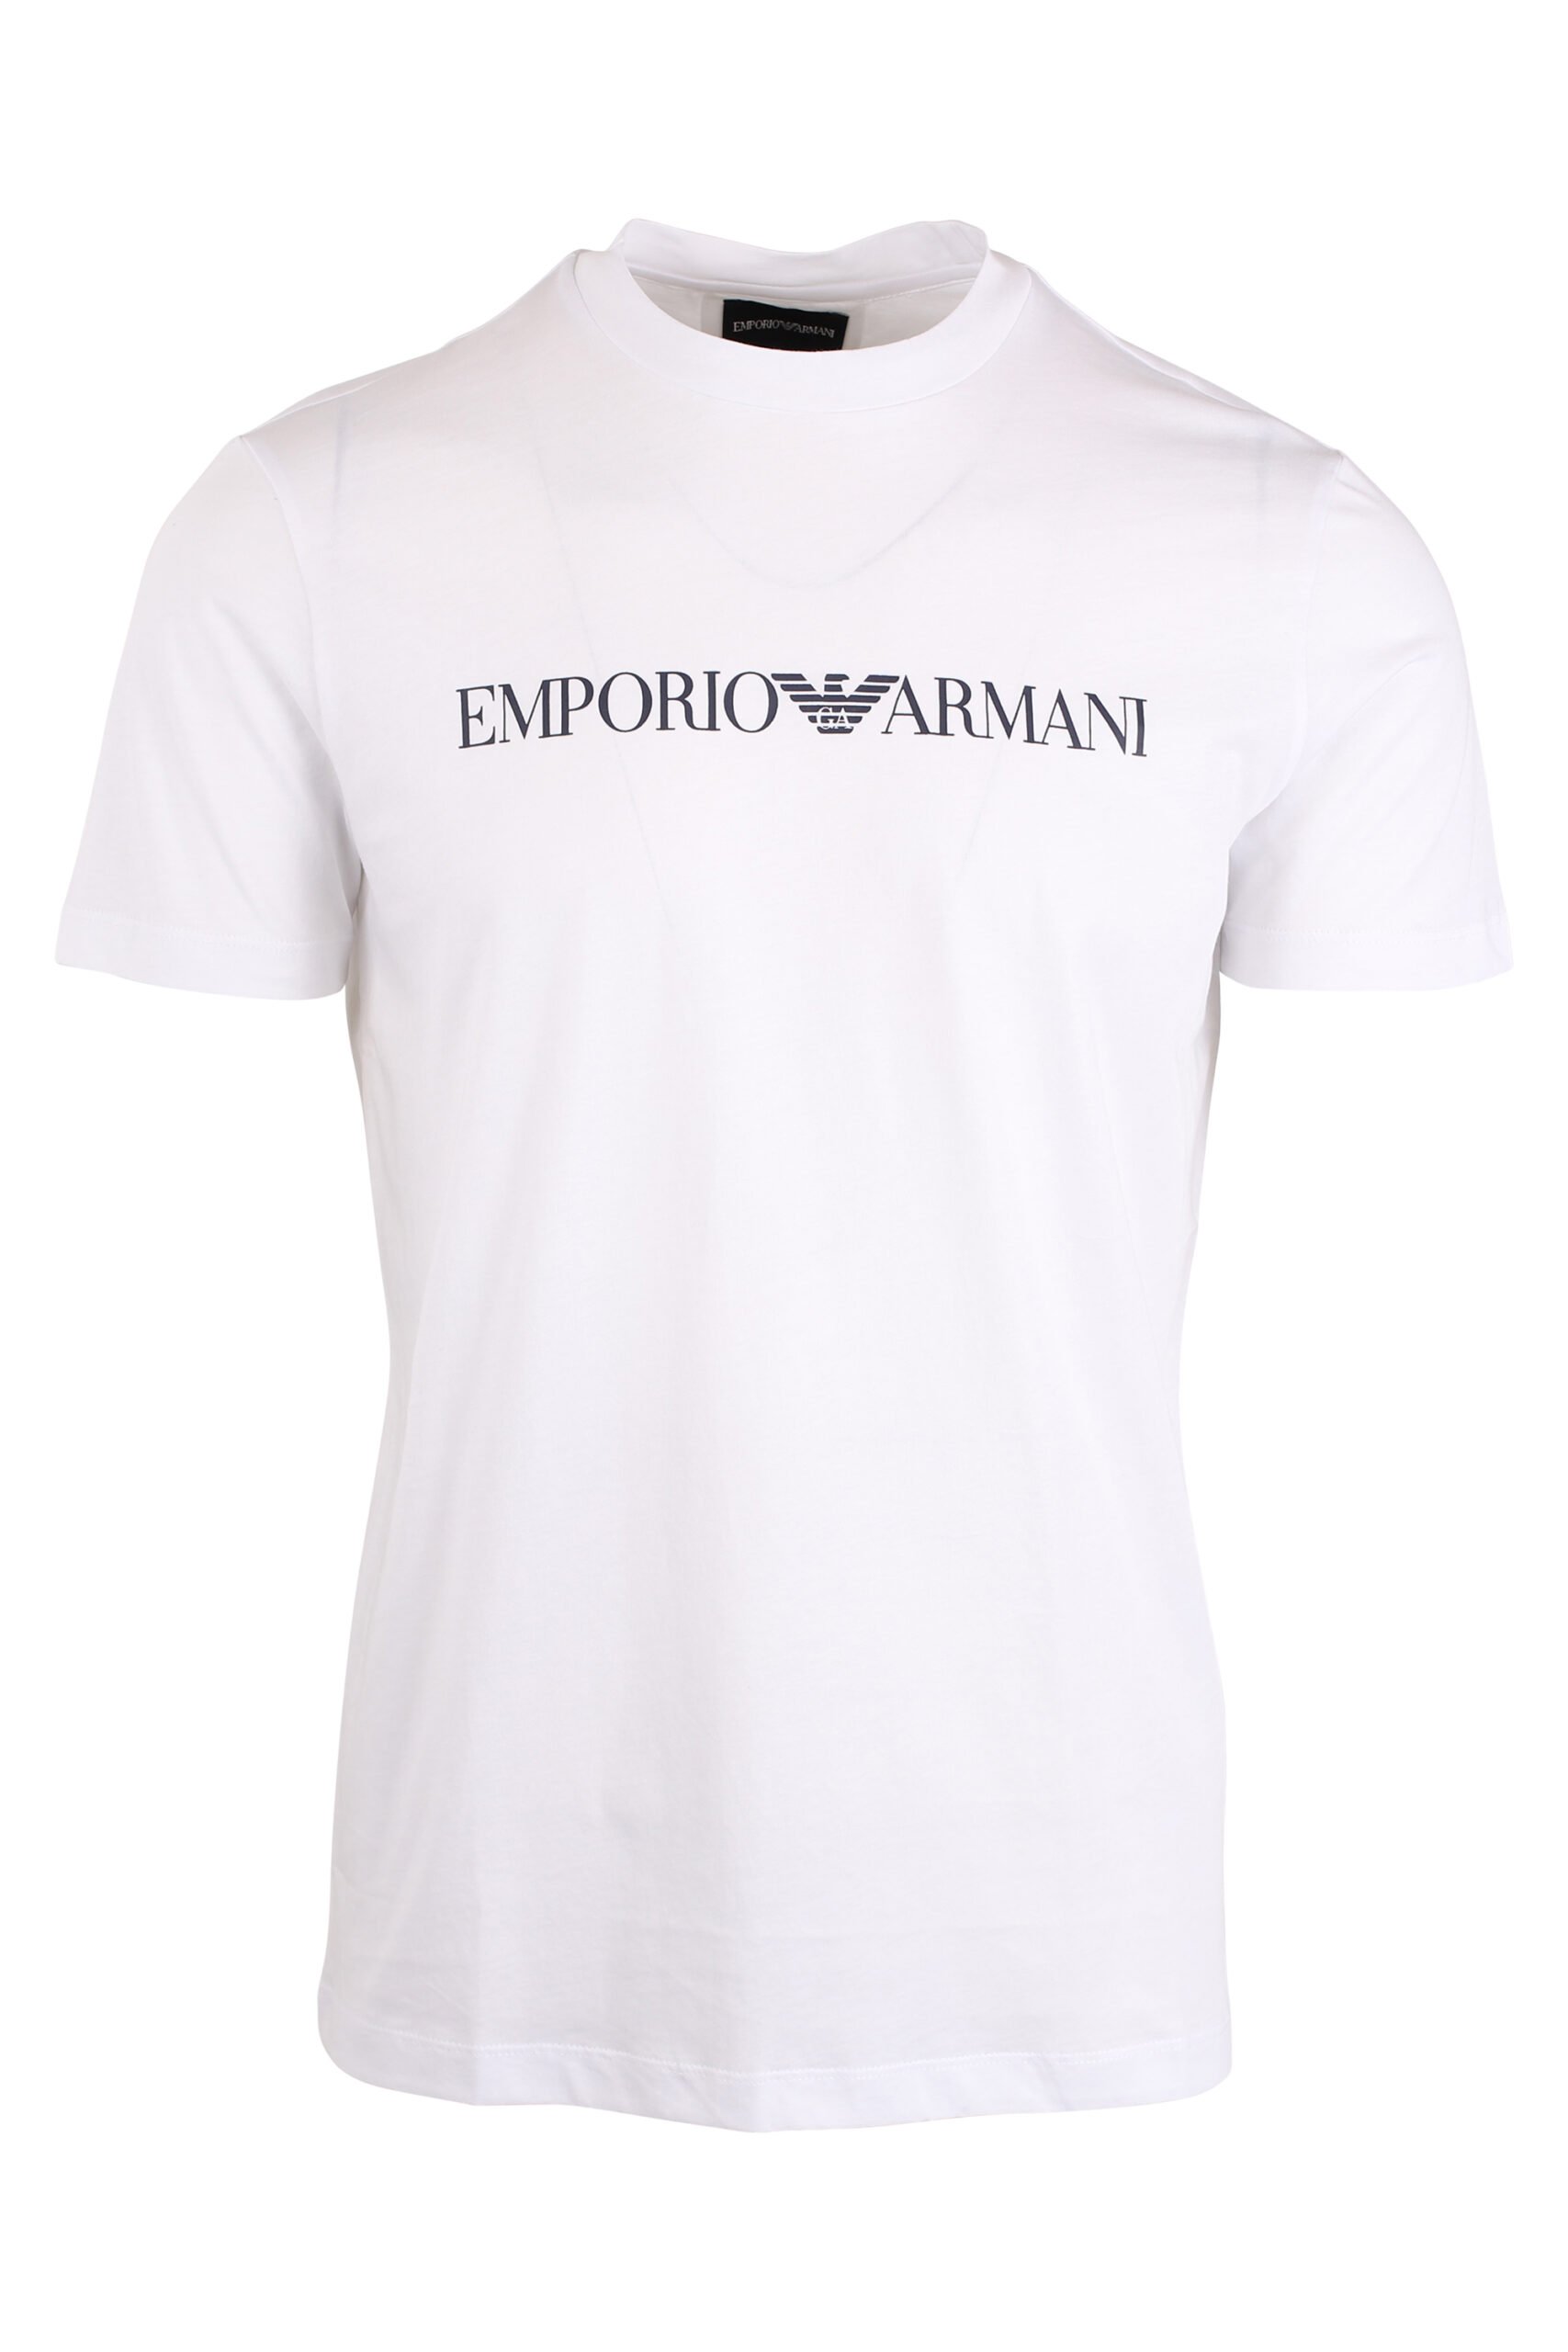 Armani - Camiseta blanca con maxilogo letras negras - Fashion